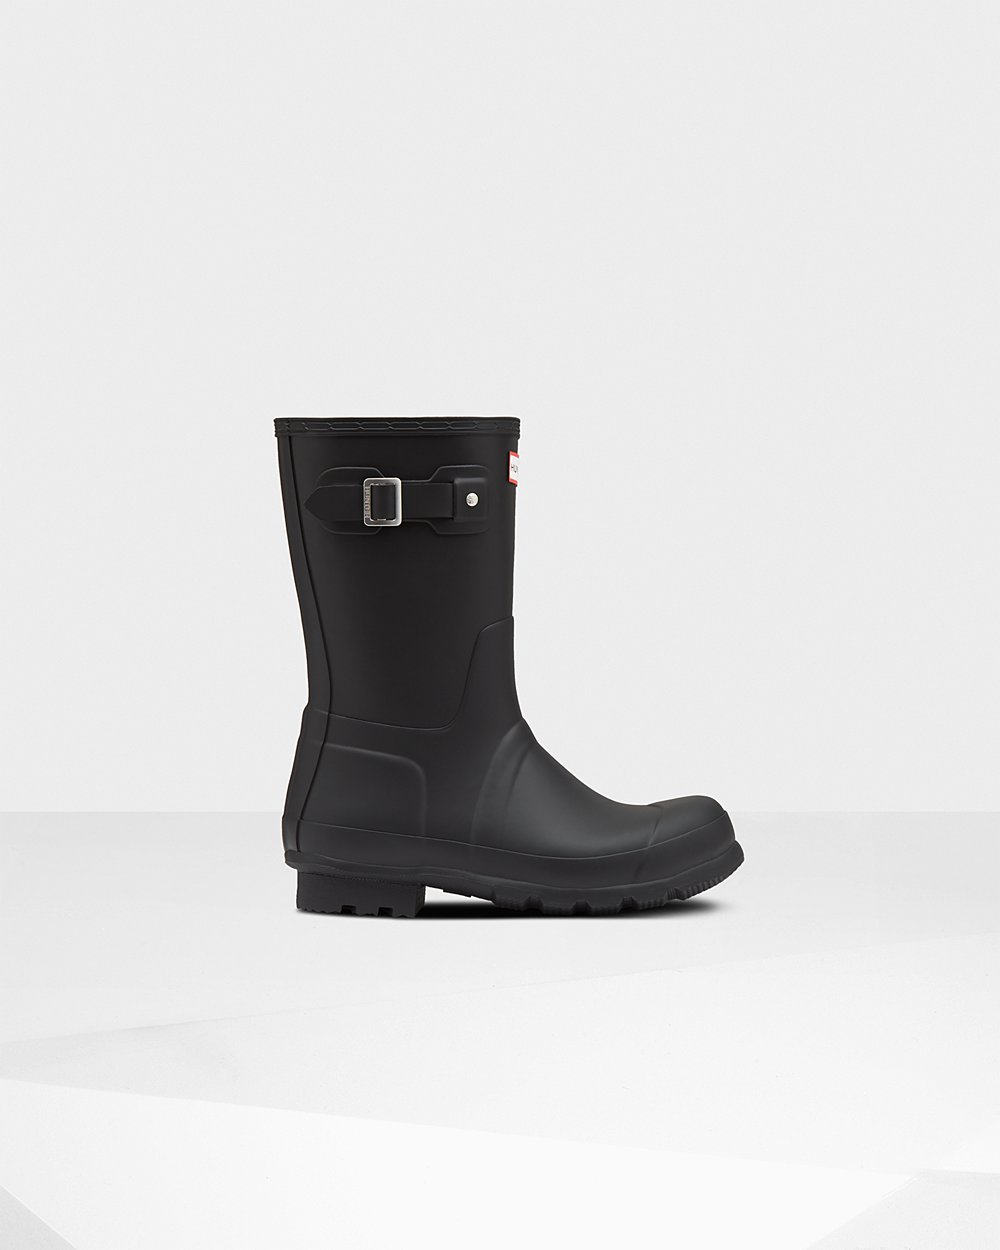 Mens Short Rain Boots - Hunter Original Insulated (78ZFCGMUS) - Black